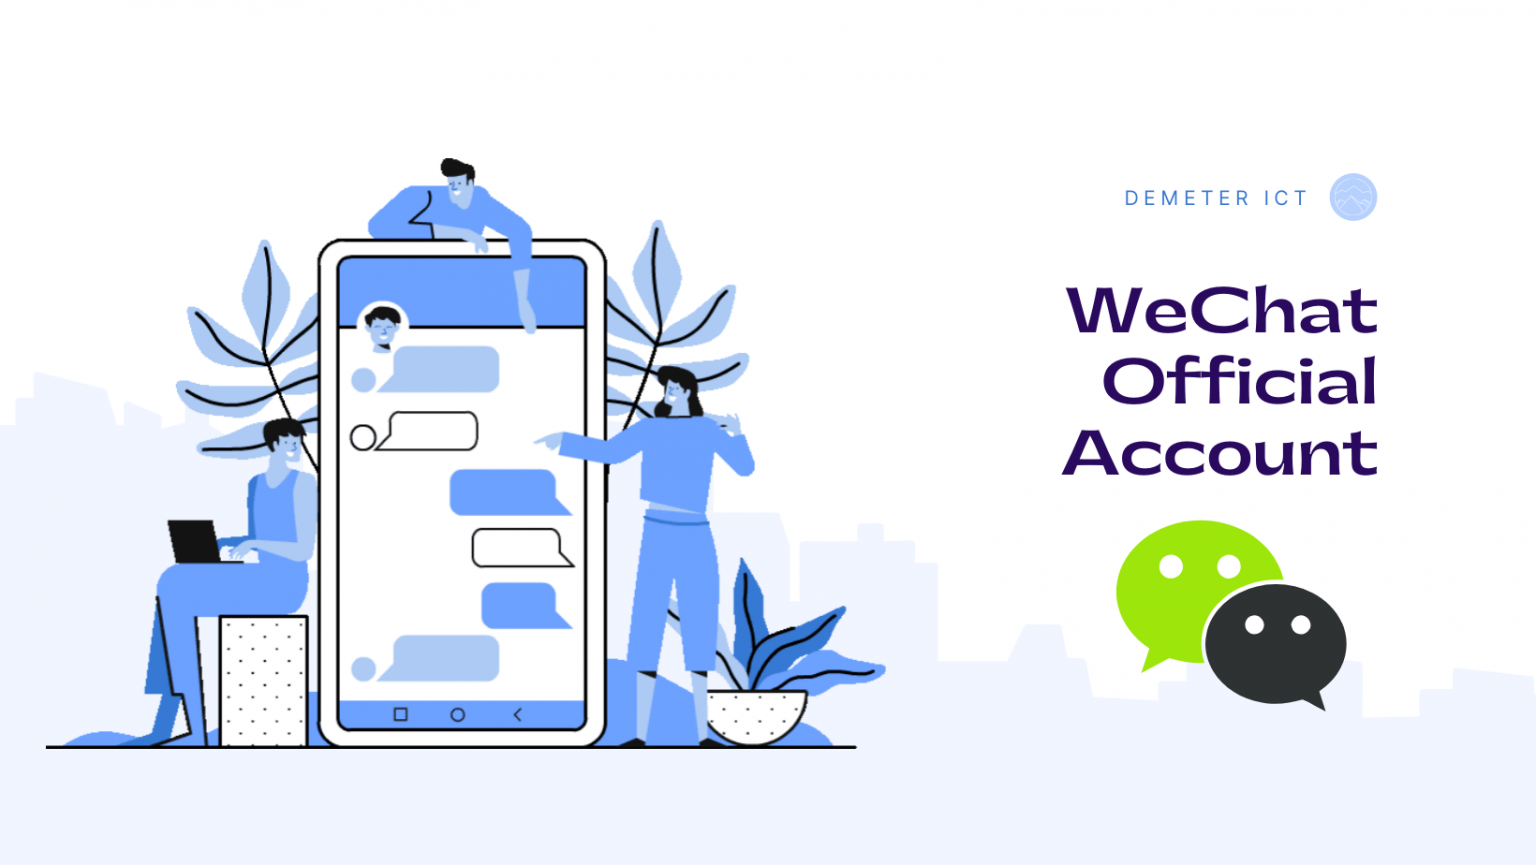 wechat official account management